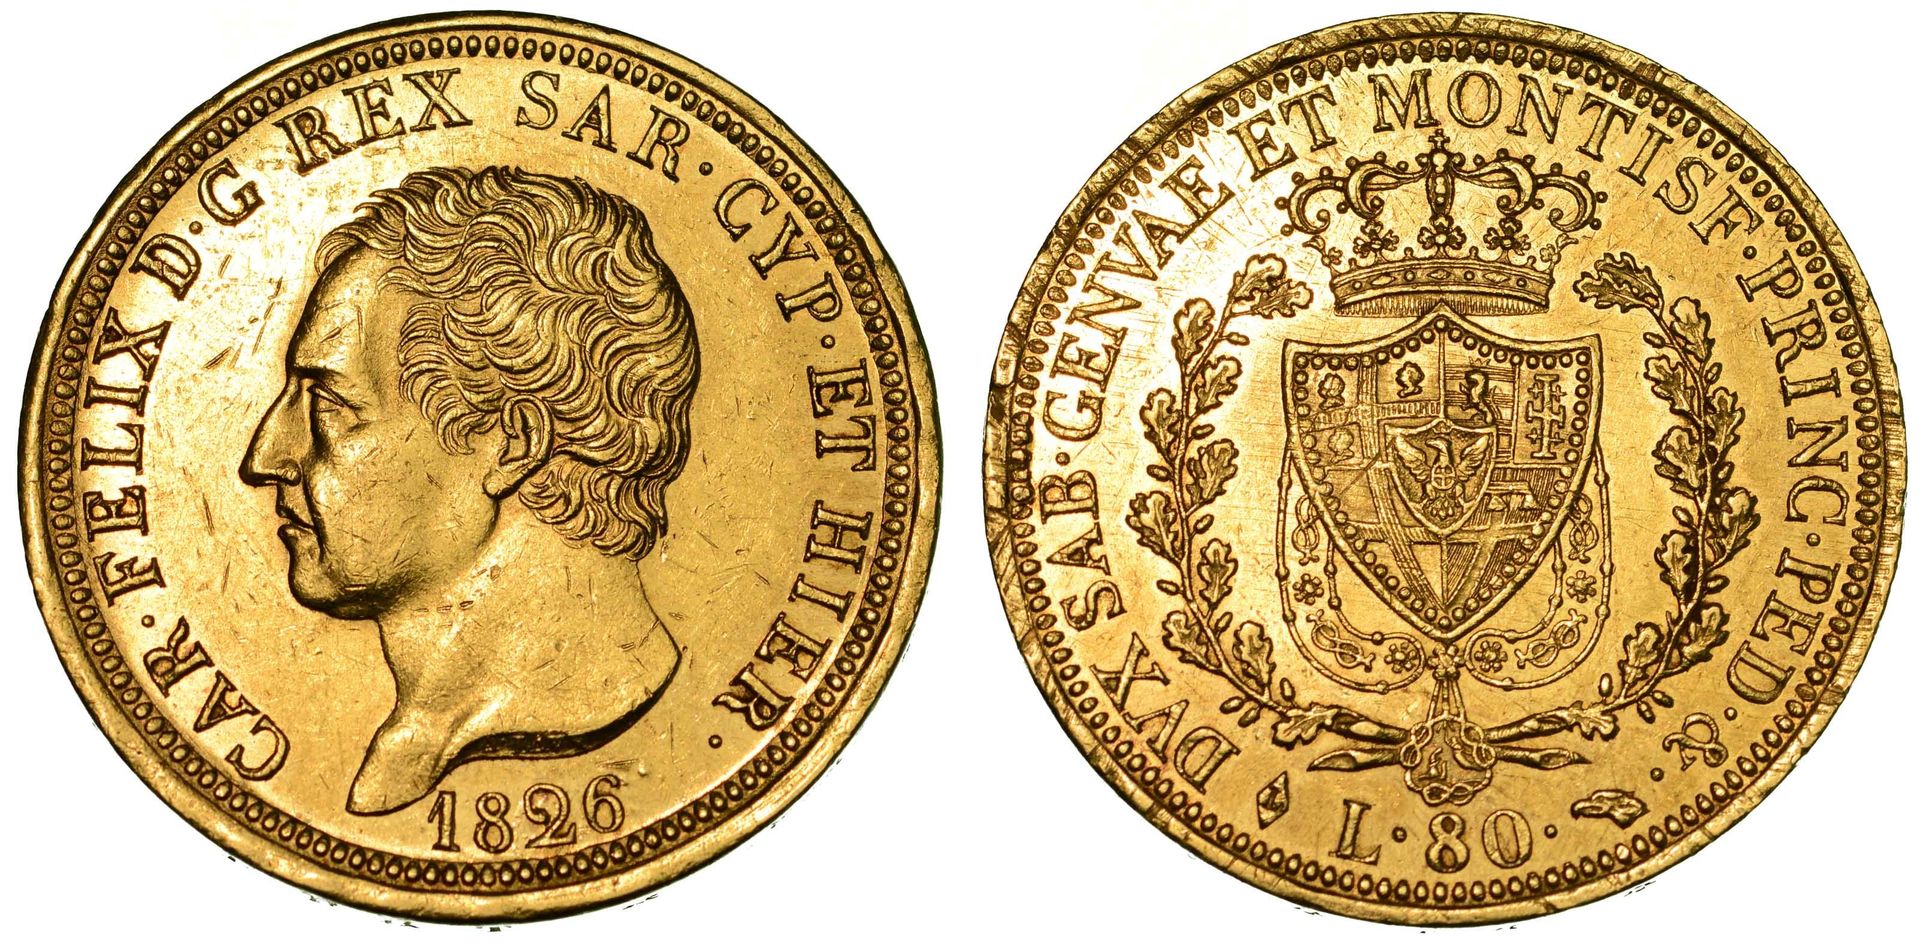 Casa Savoia 撒丁岛王国。CARLO FELICE DI SAVOIA, 1821-1831.都灵。
头部向右转/有四分之一心的盾形纹章，上面悬挂着两&hellip;